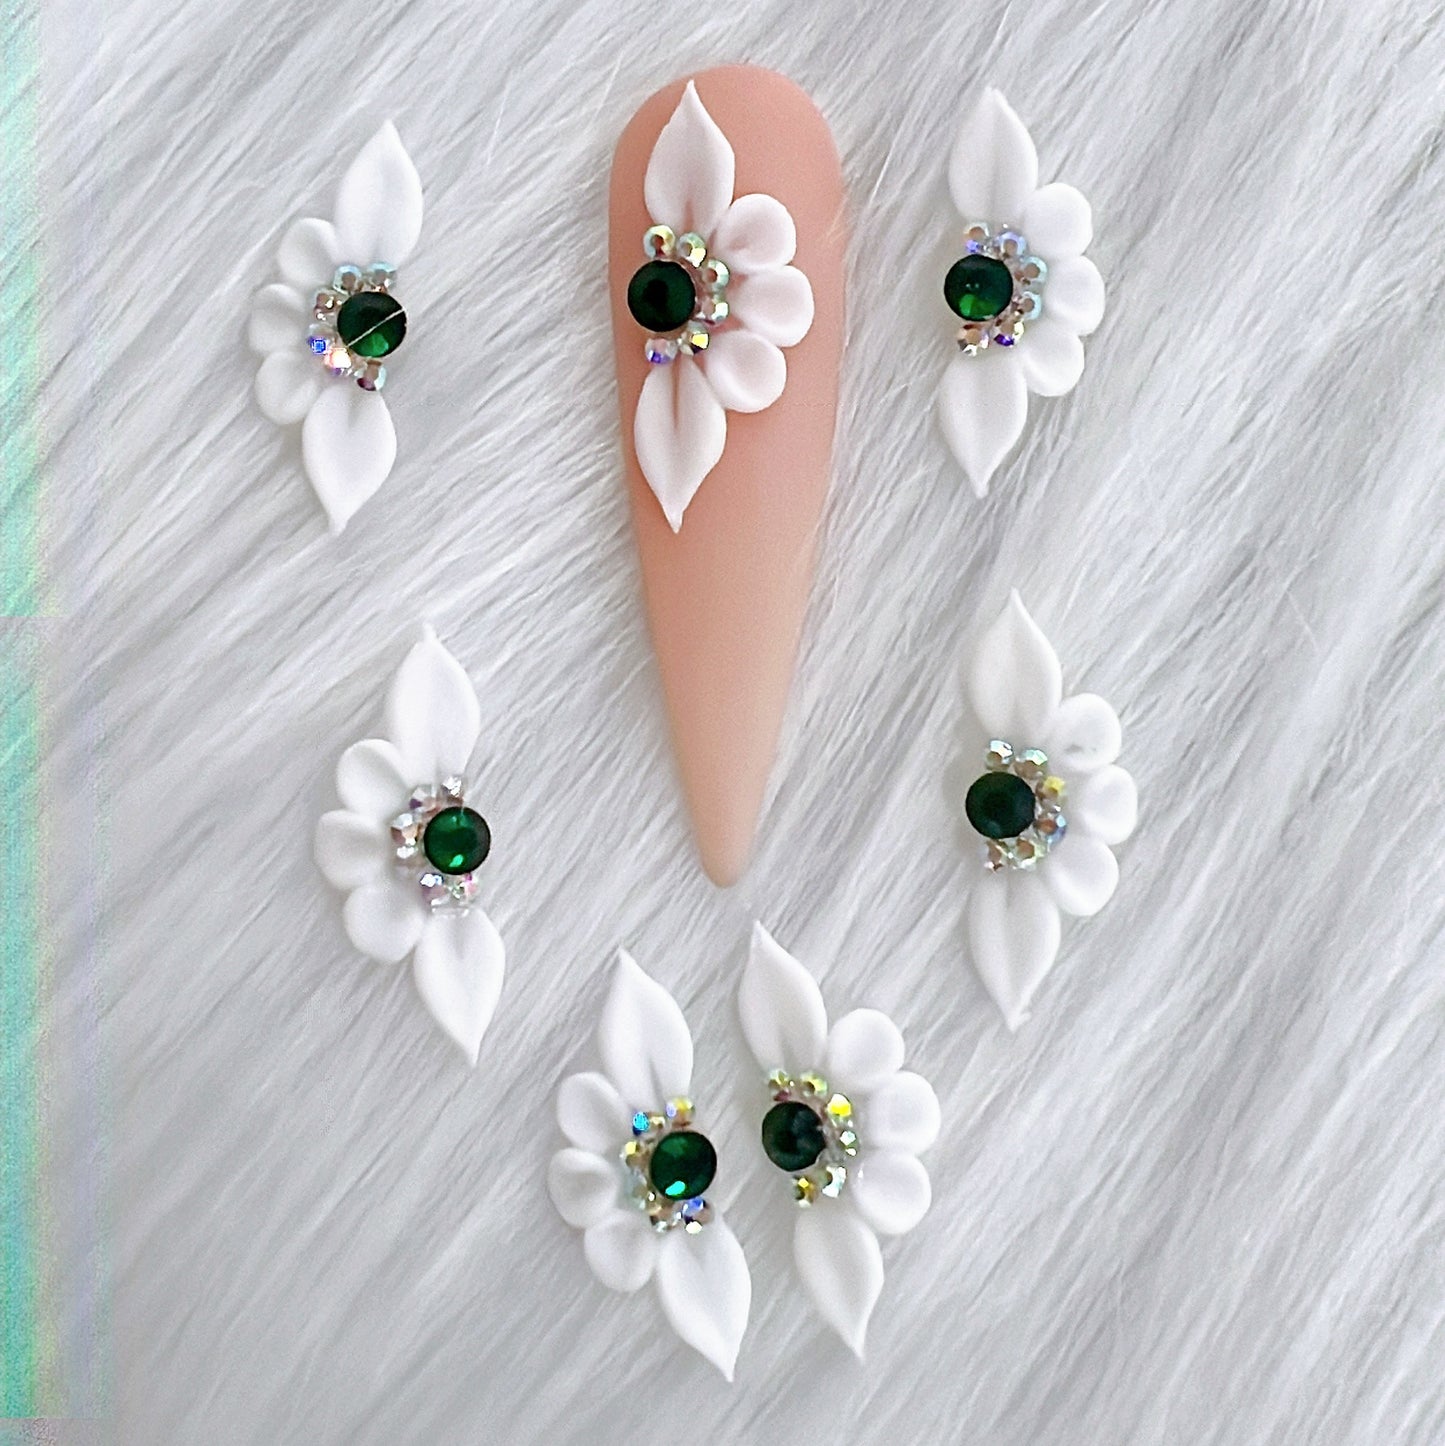 4pcs White 3D Acrylic Nail Flowers with Green Rhinestone